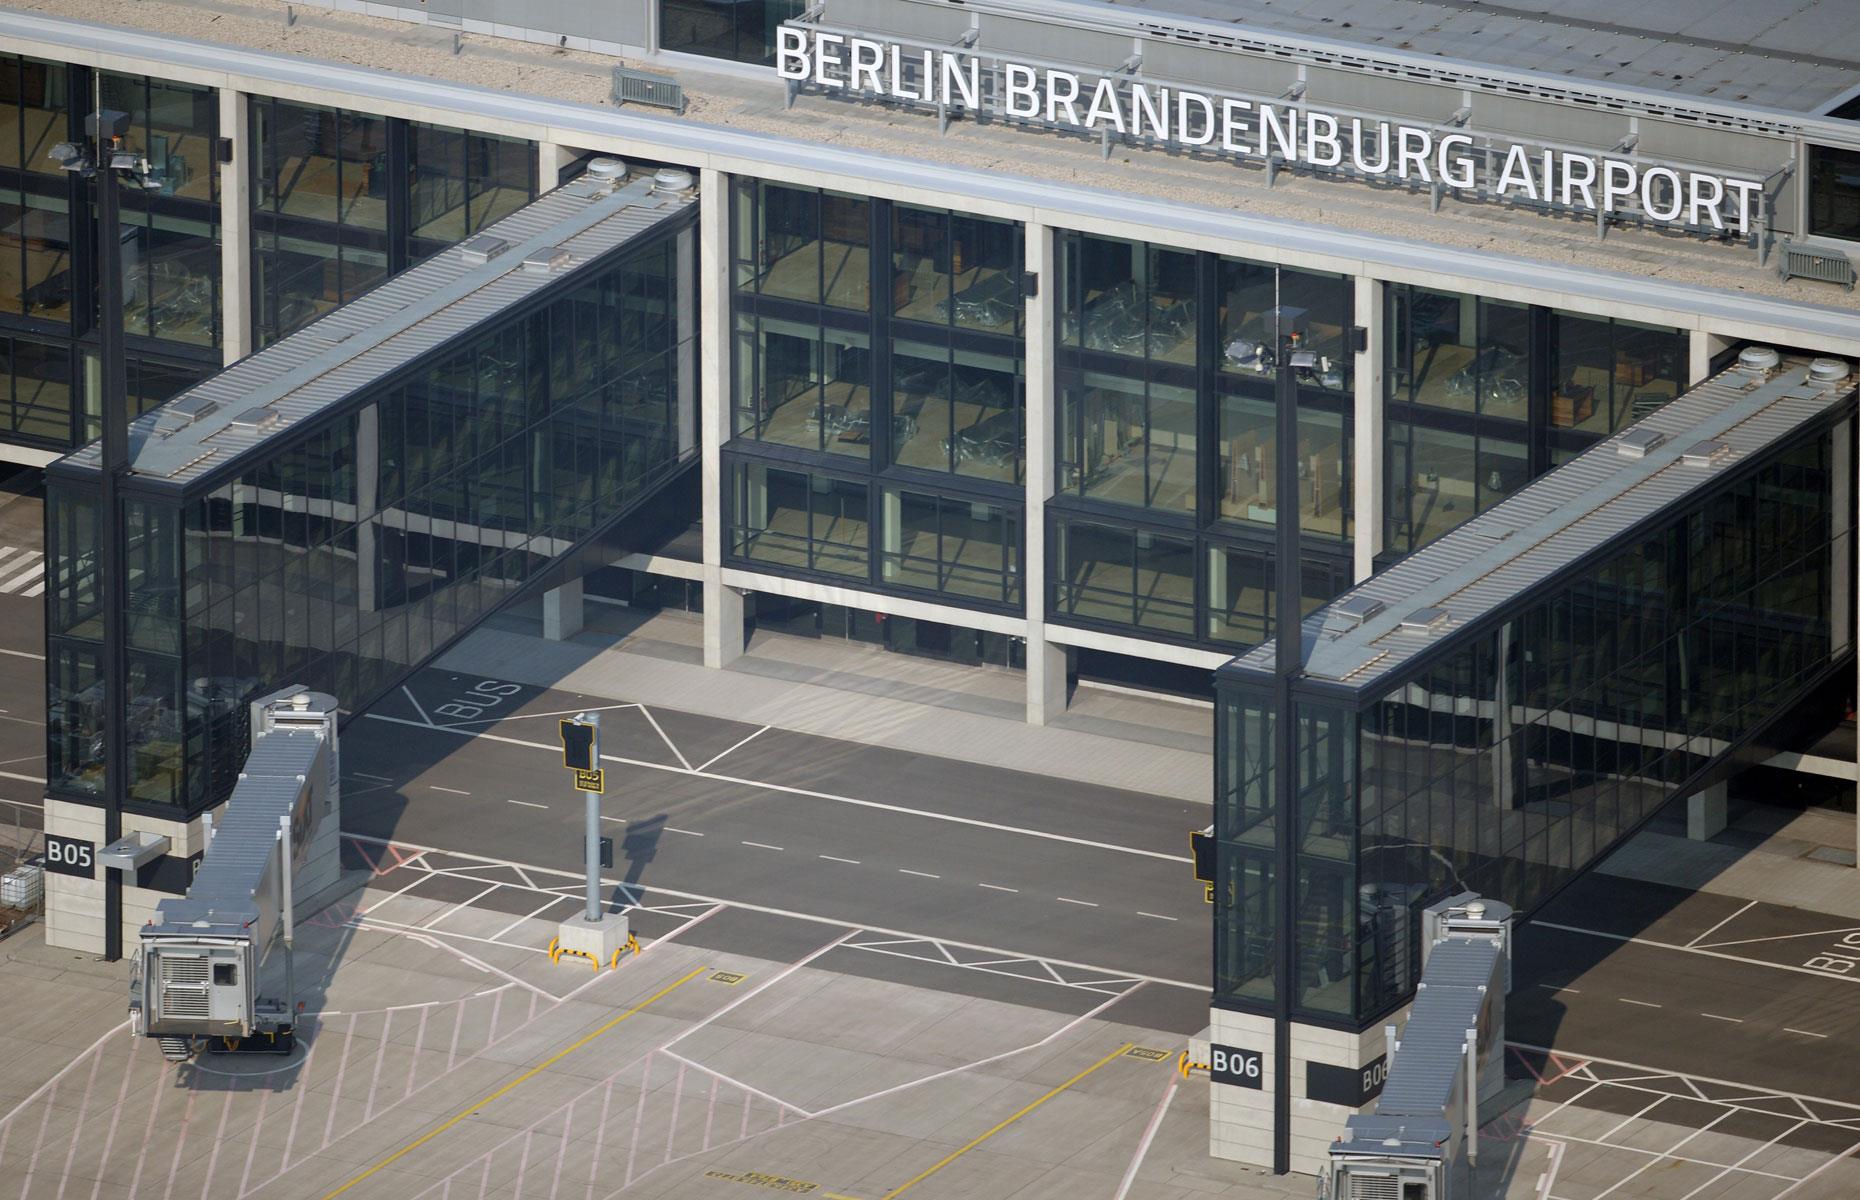 Berlin Brandenburg Airport, Germany 